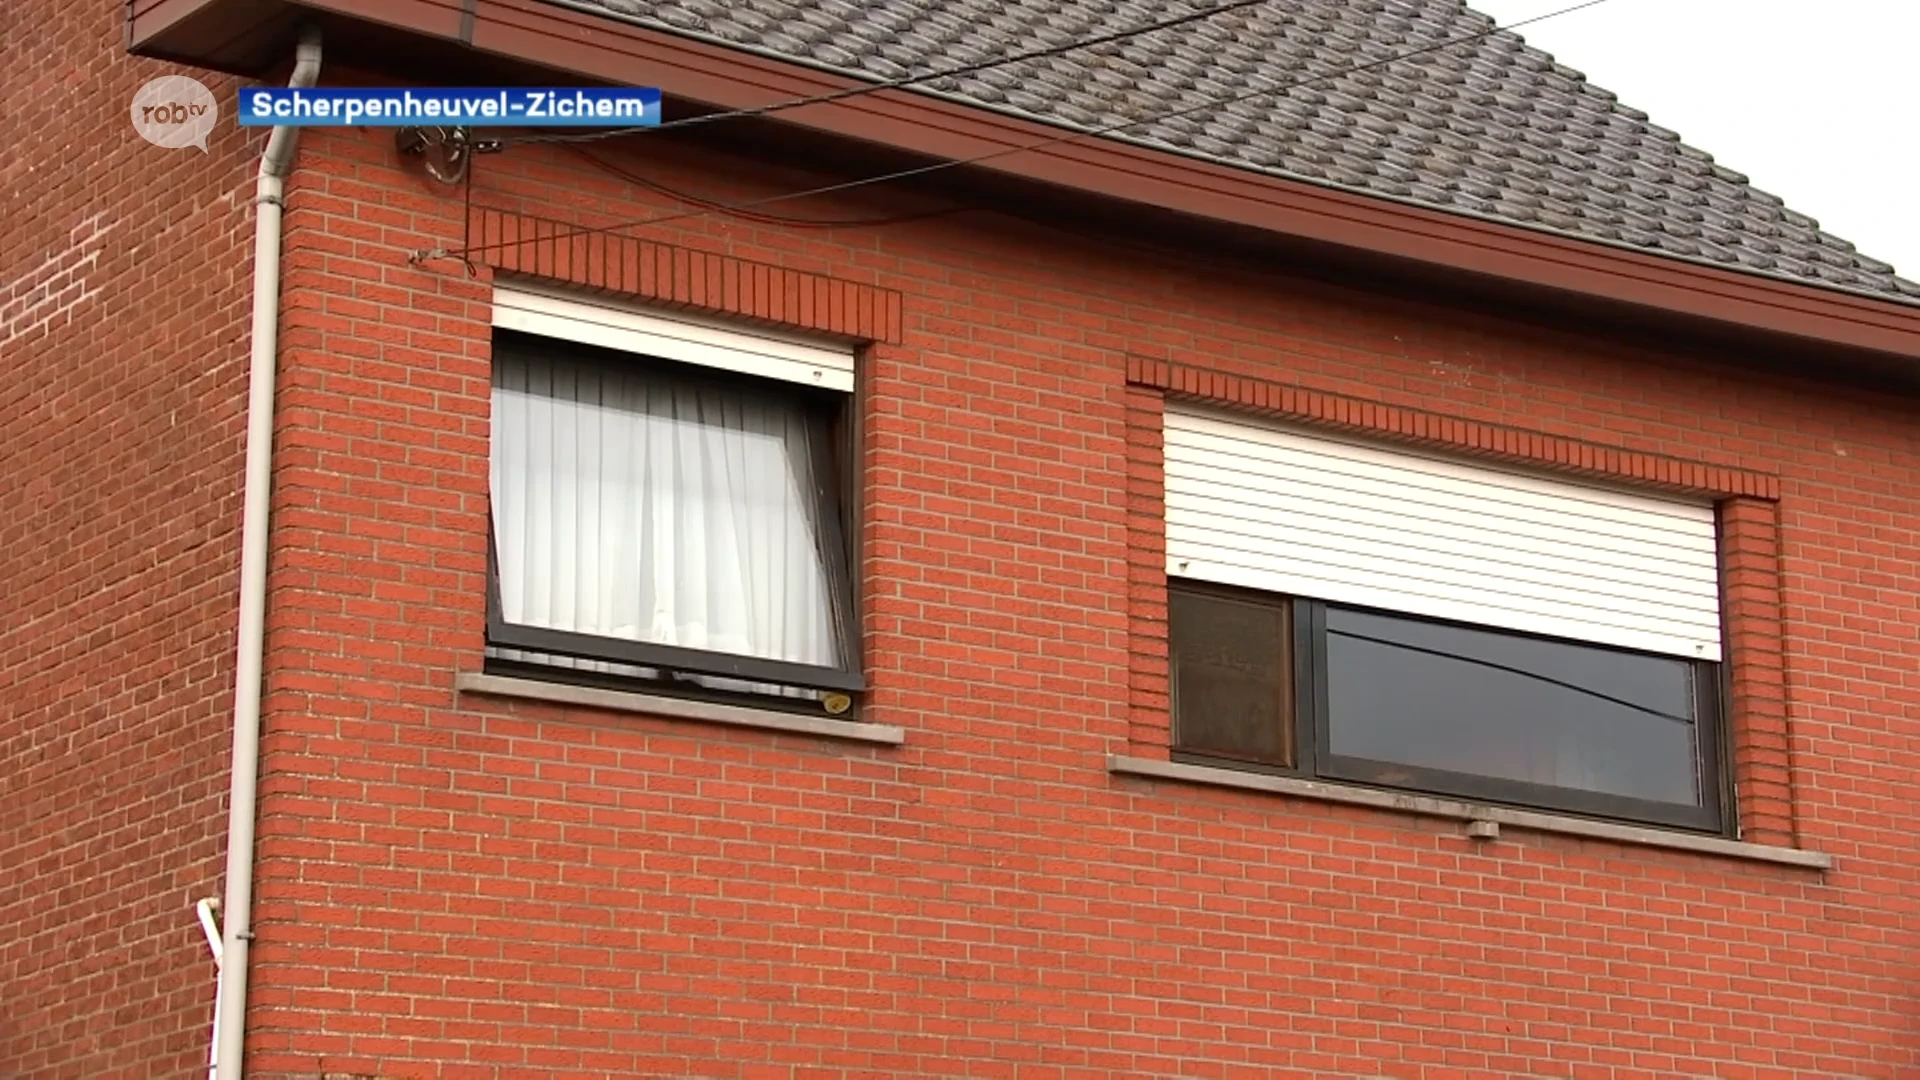 Slaapkamer brandt uit in woning langs Averbodeweg in Scherpenheuvel-Zichem: niemand gewond